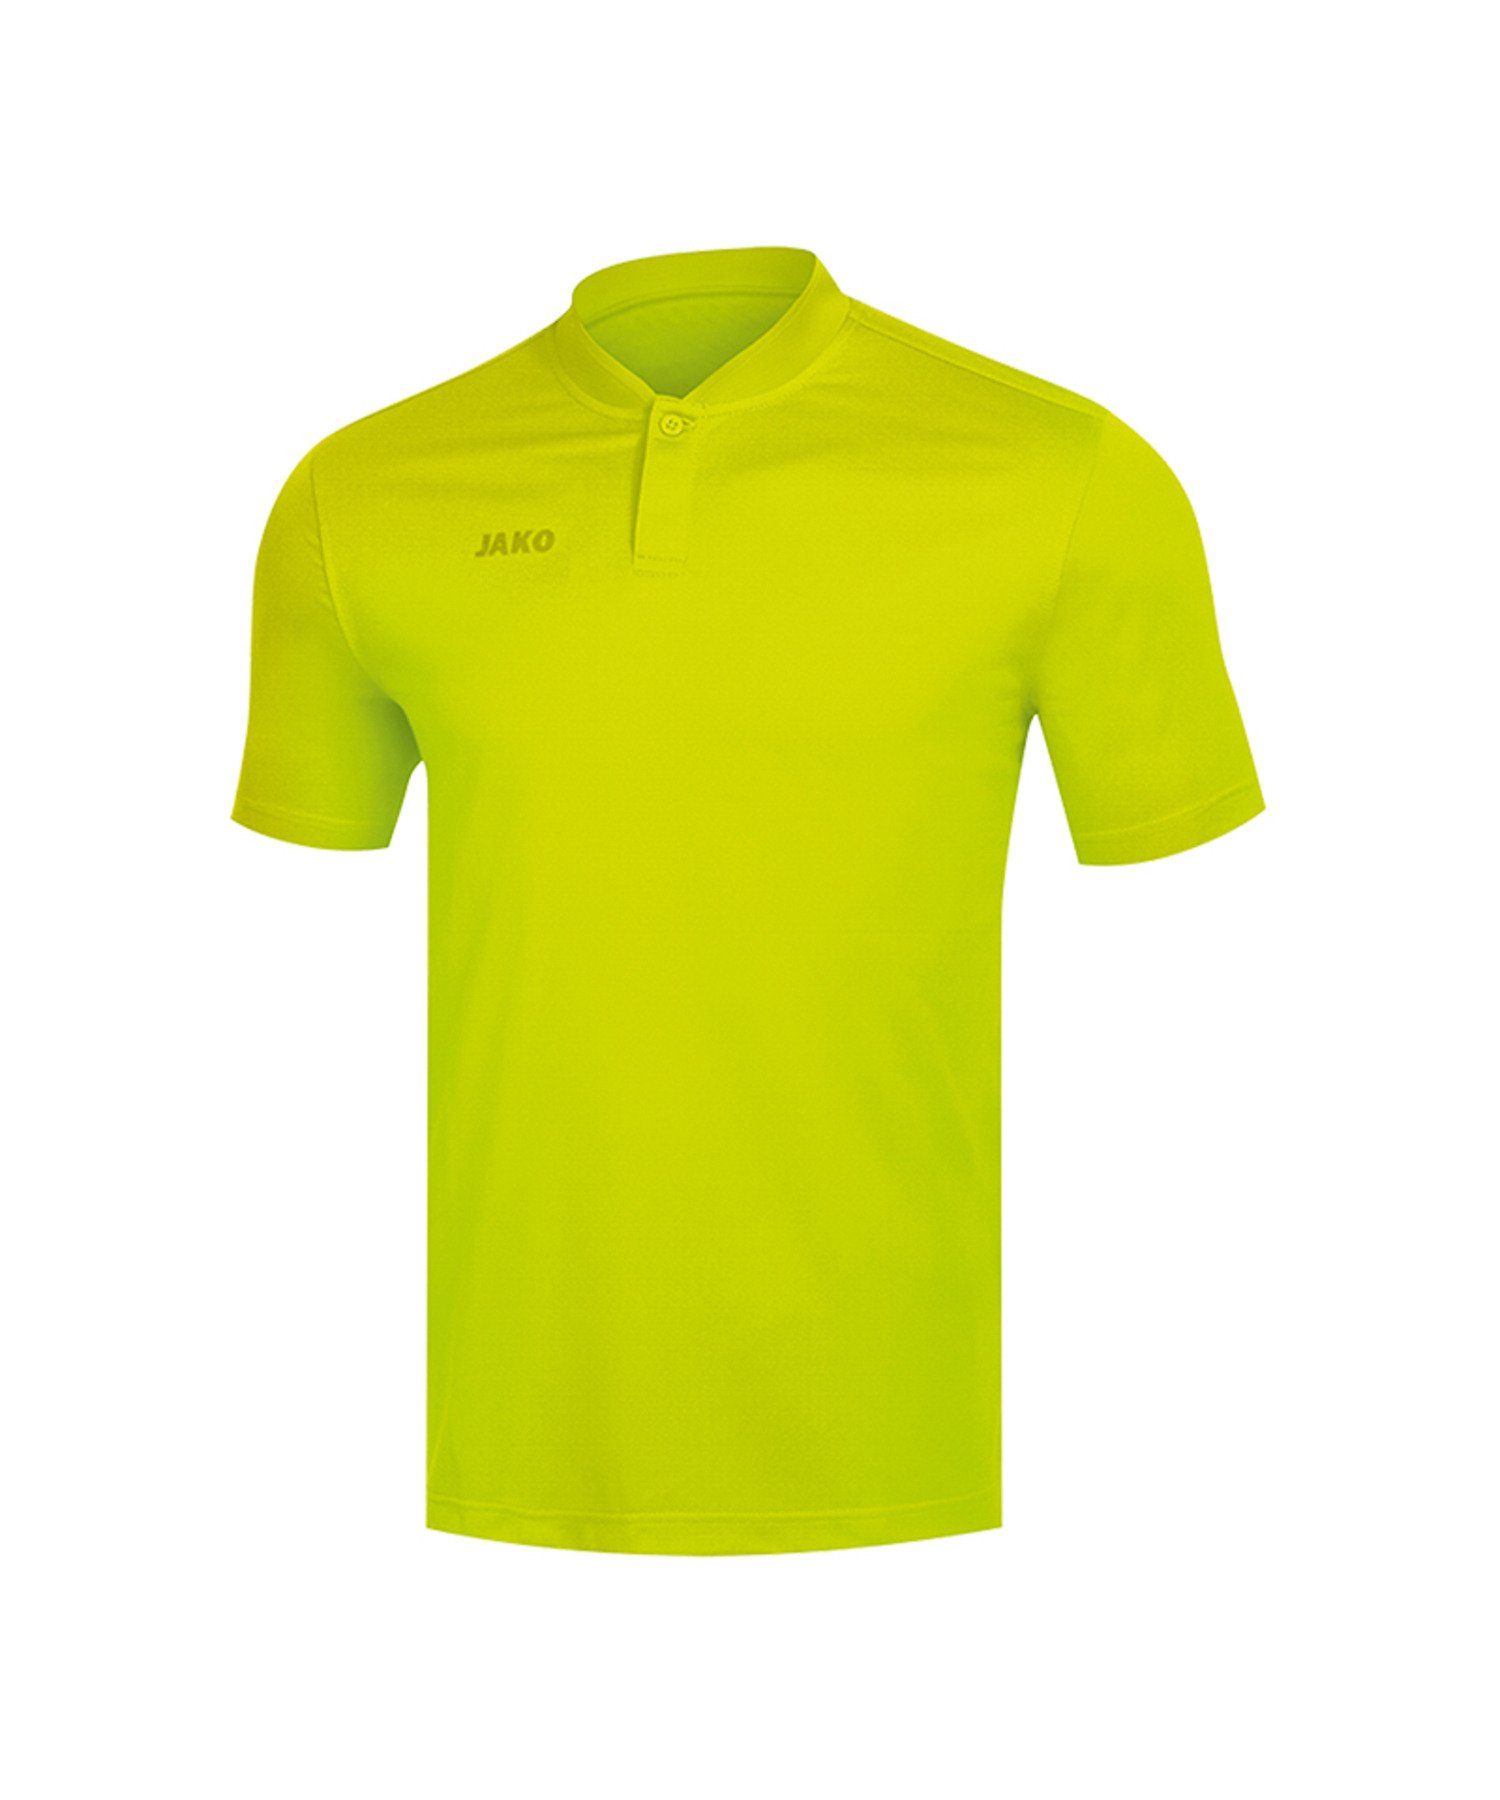 Prestige Poloshirt T-Shirt Gelb Jako default